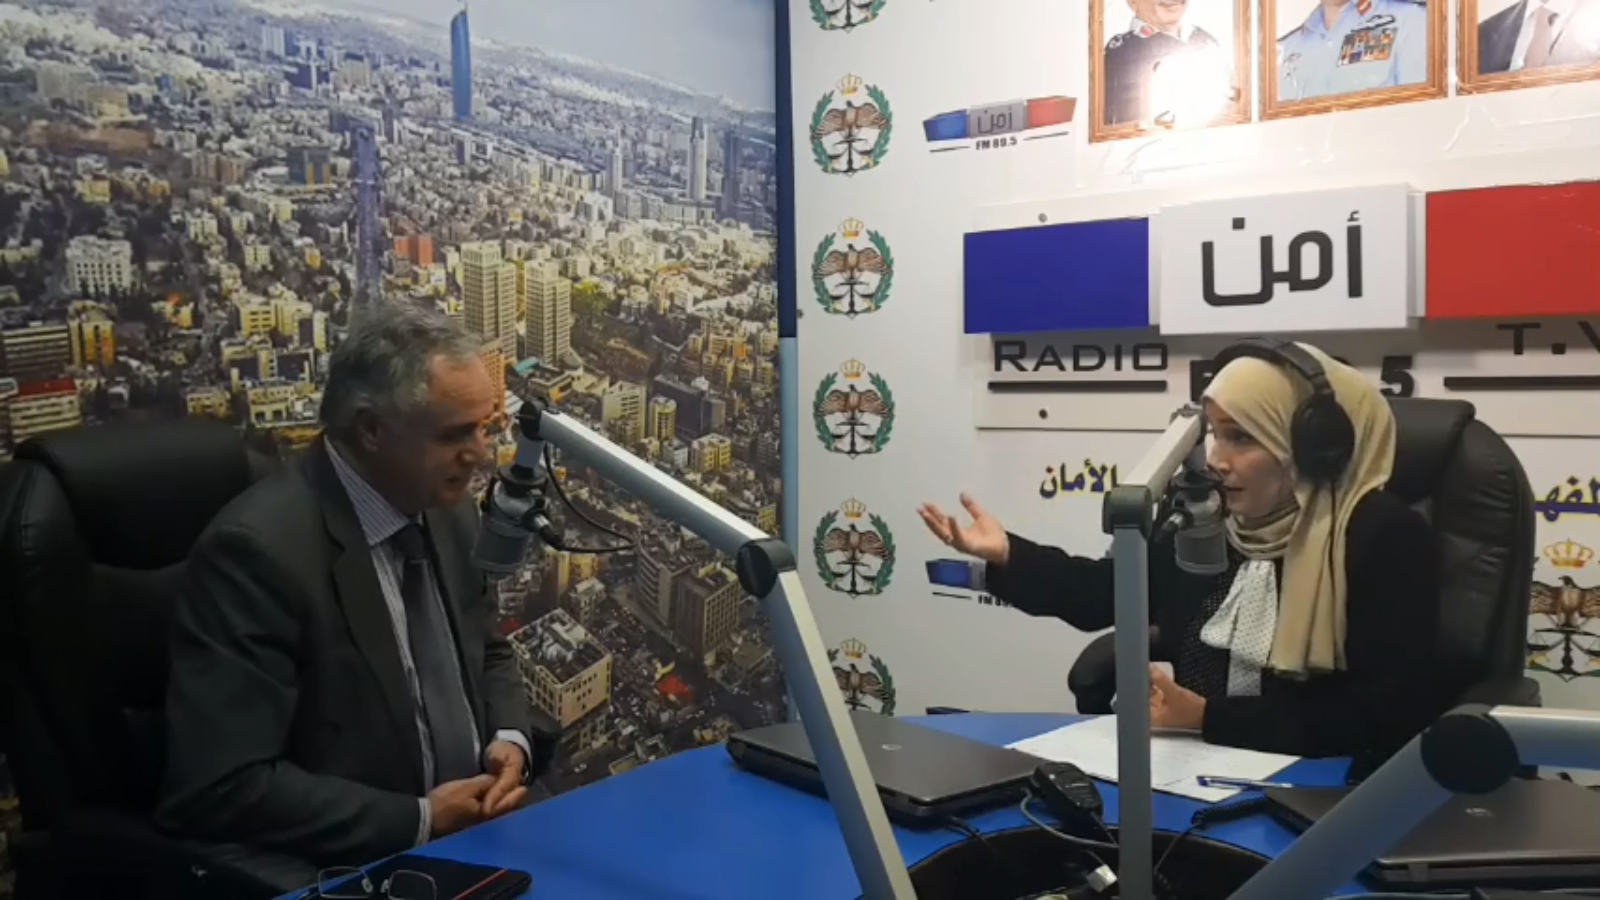 Abu Karaki: A meeting on FM radio